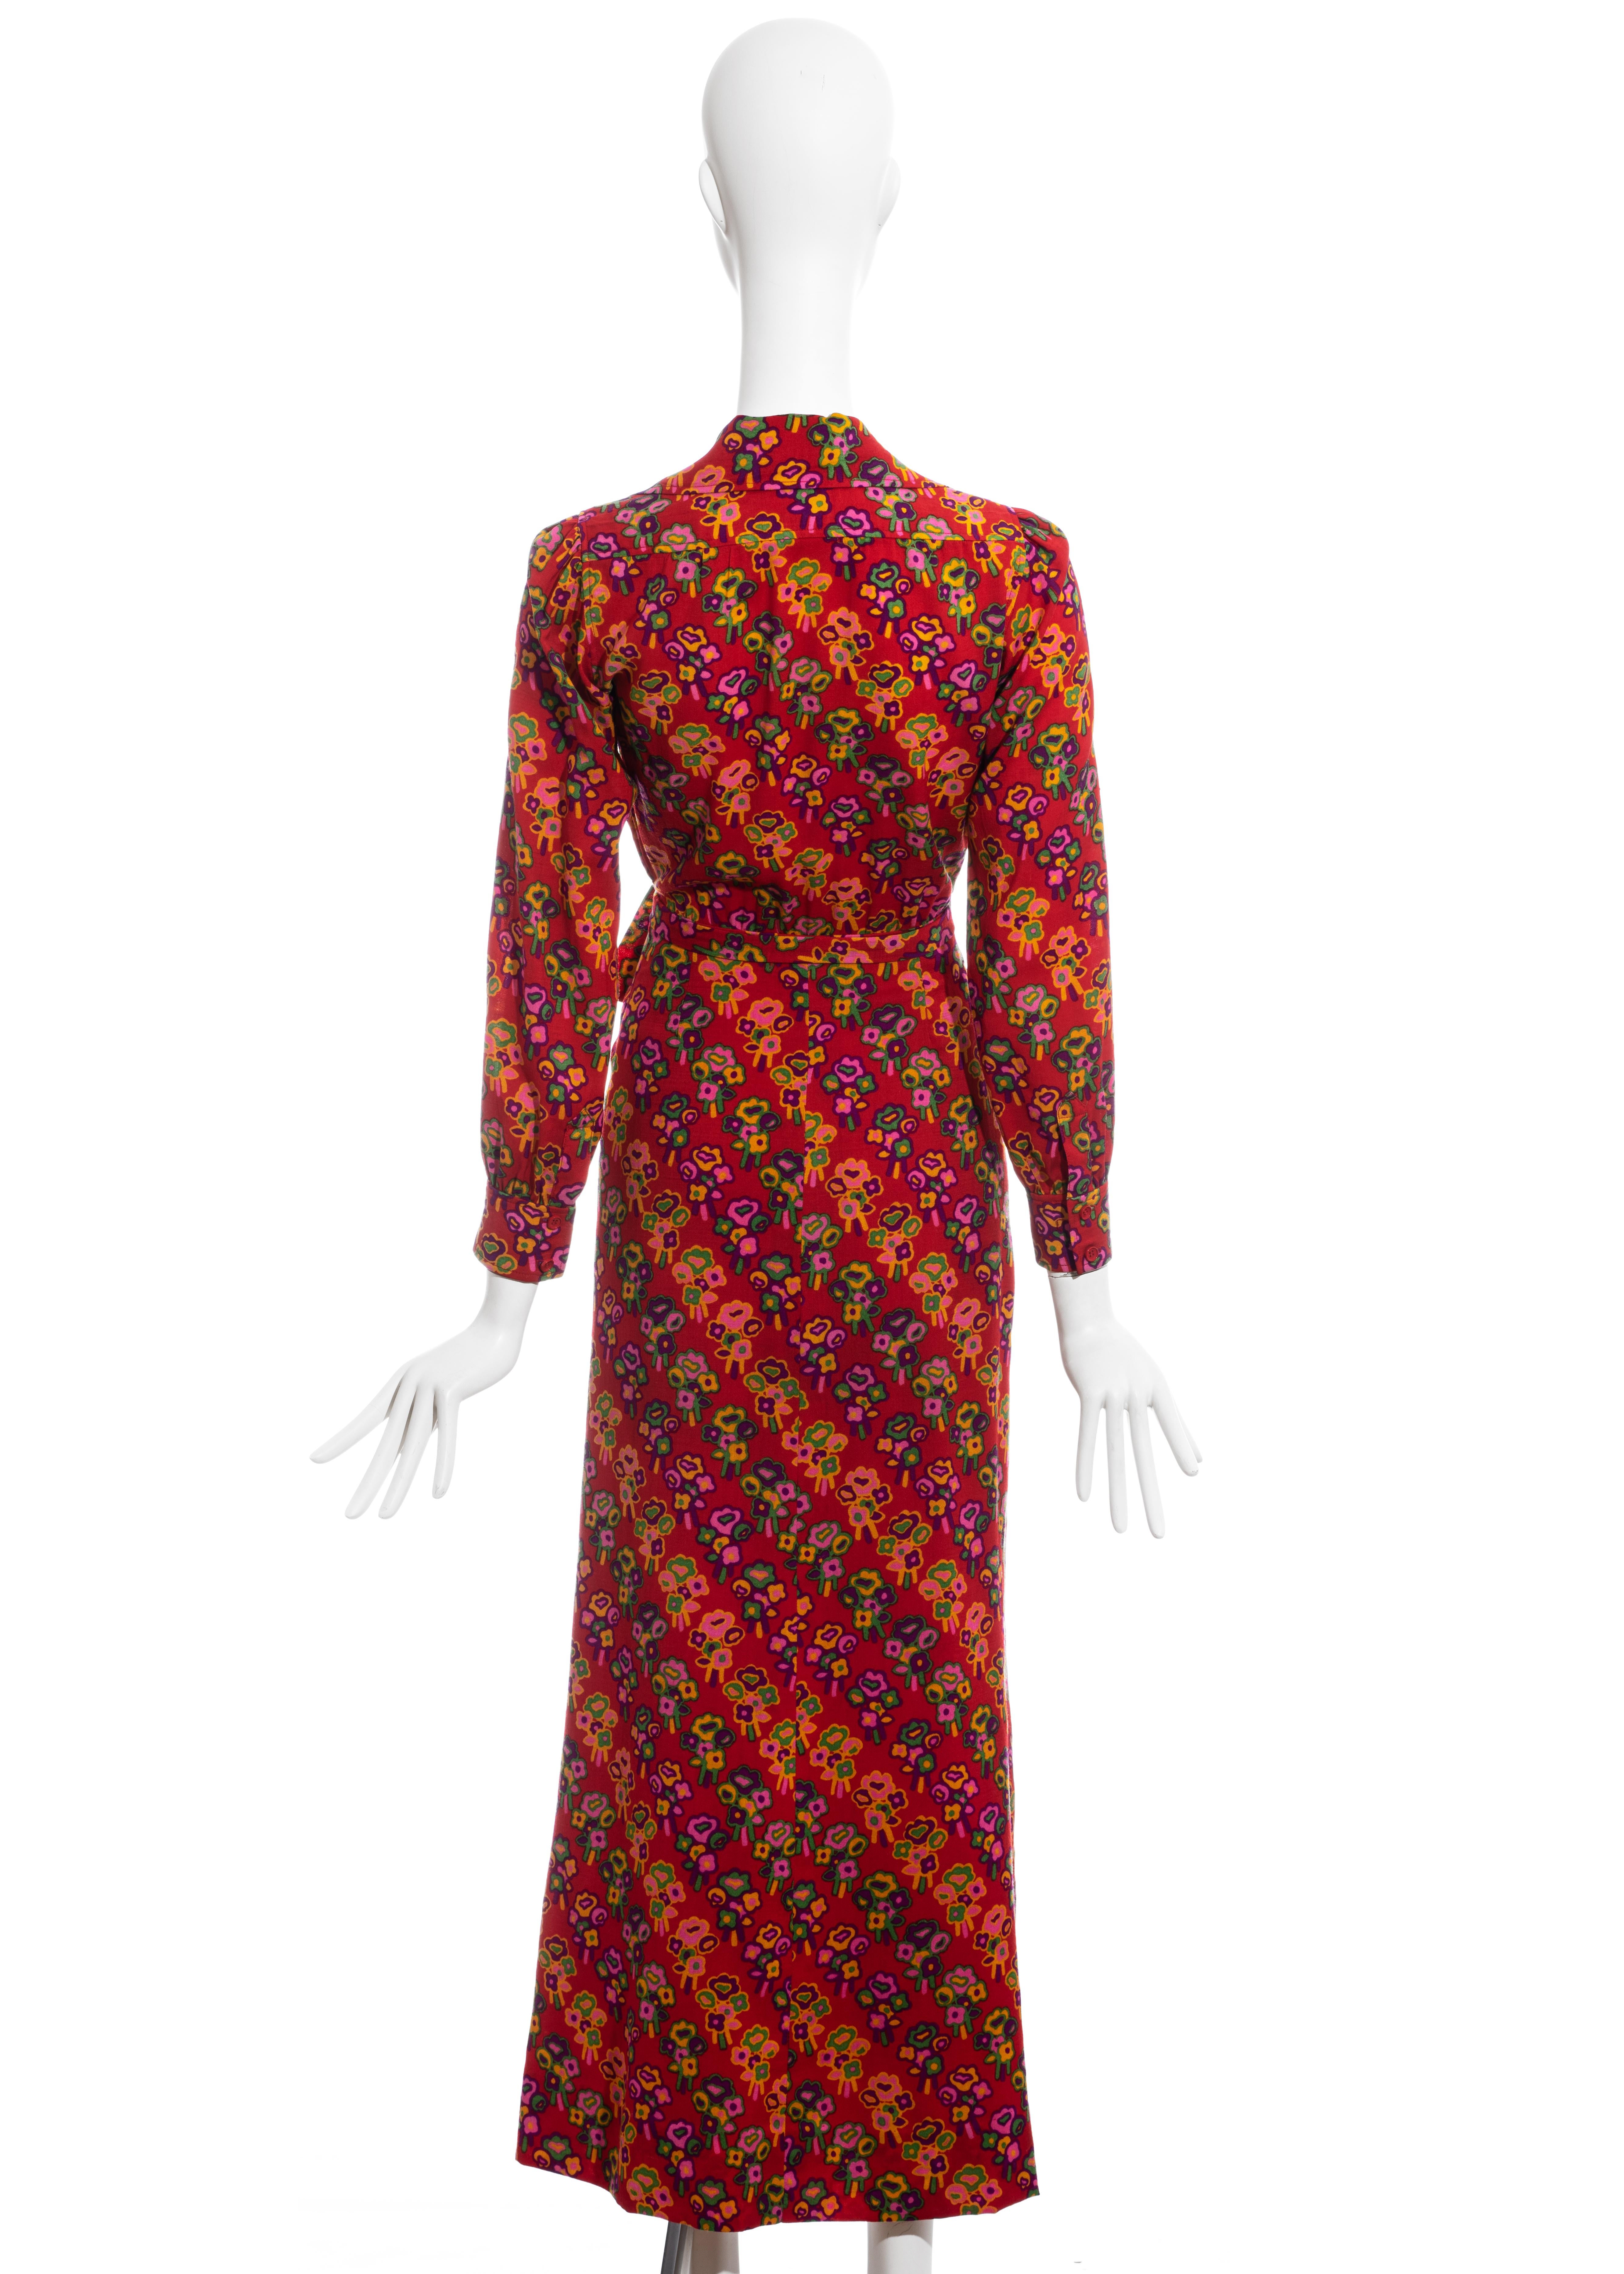 Women's Yves Saint Laurent red floral cotton maxi summer dress, ss 1971